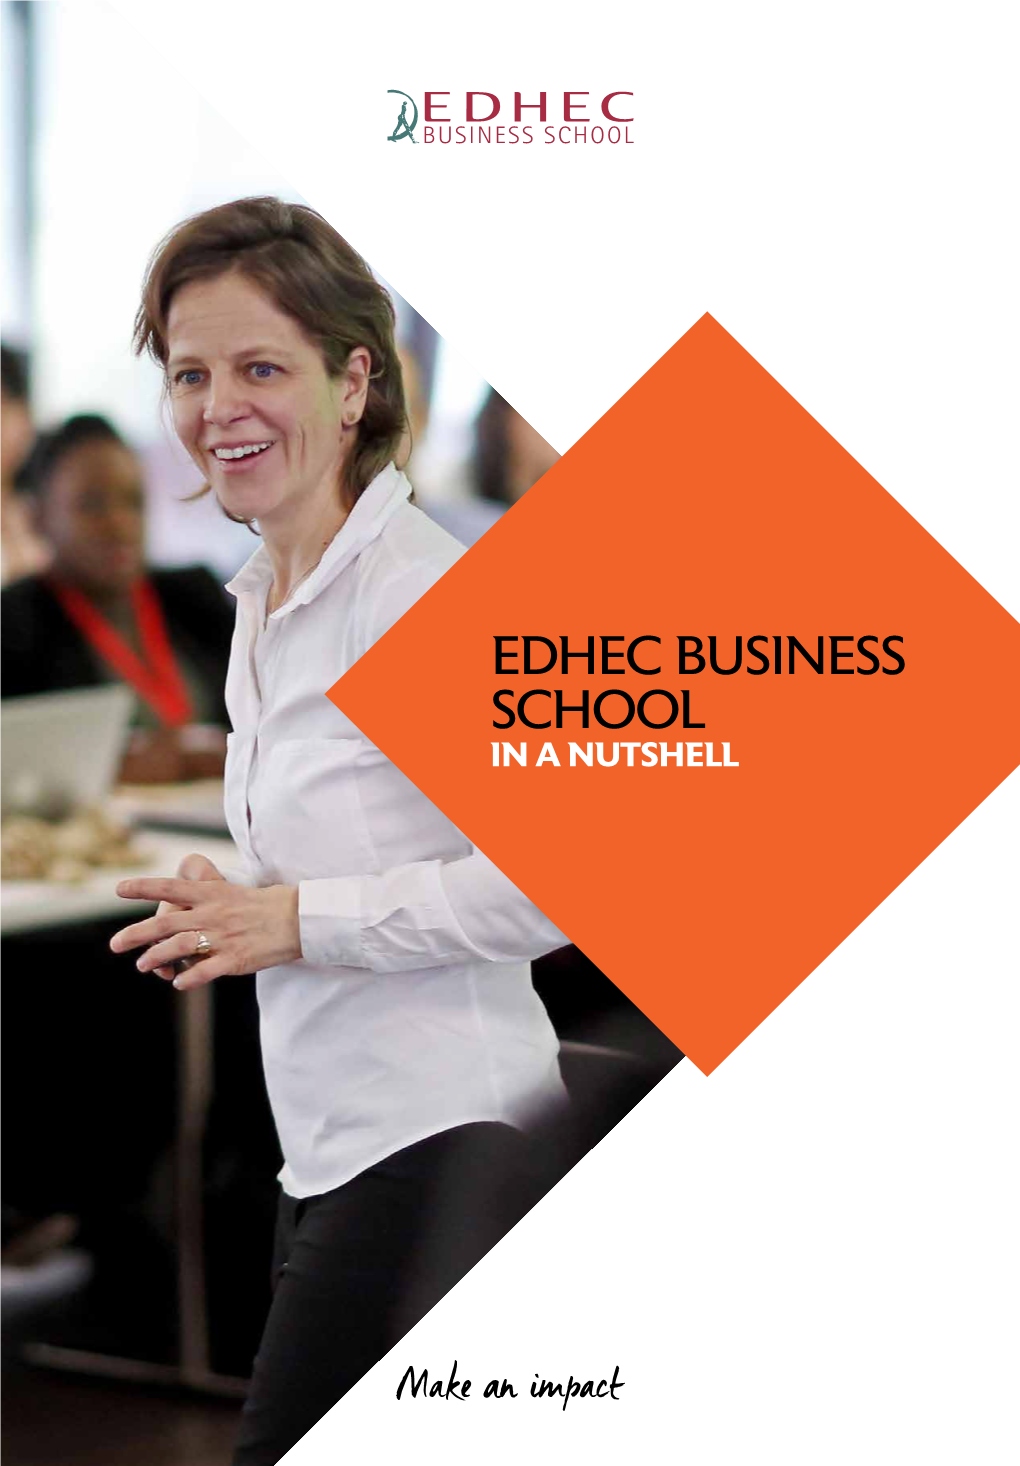 Edhec Business School in a Nutshell Presentation of EDHEC BUSINESS SCHOOL